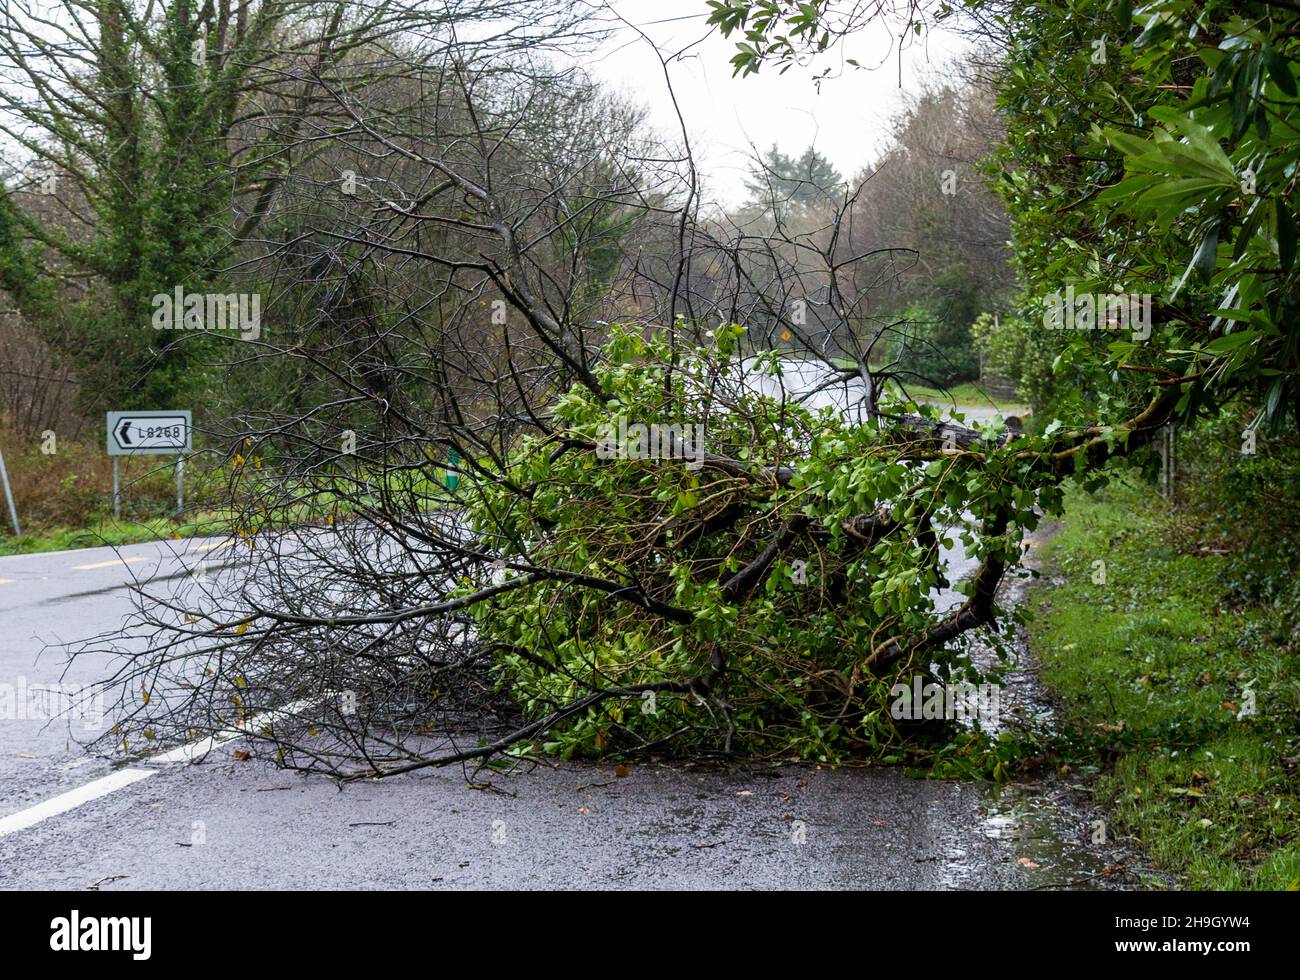 Fallen tree blocking road or highway Stock Photo